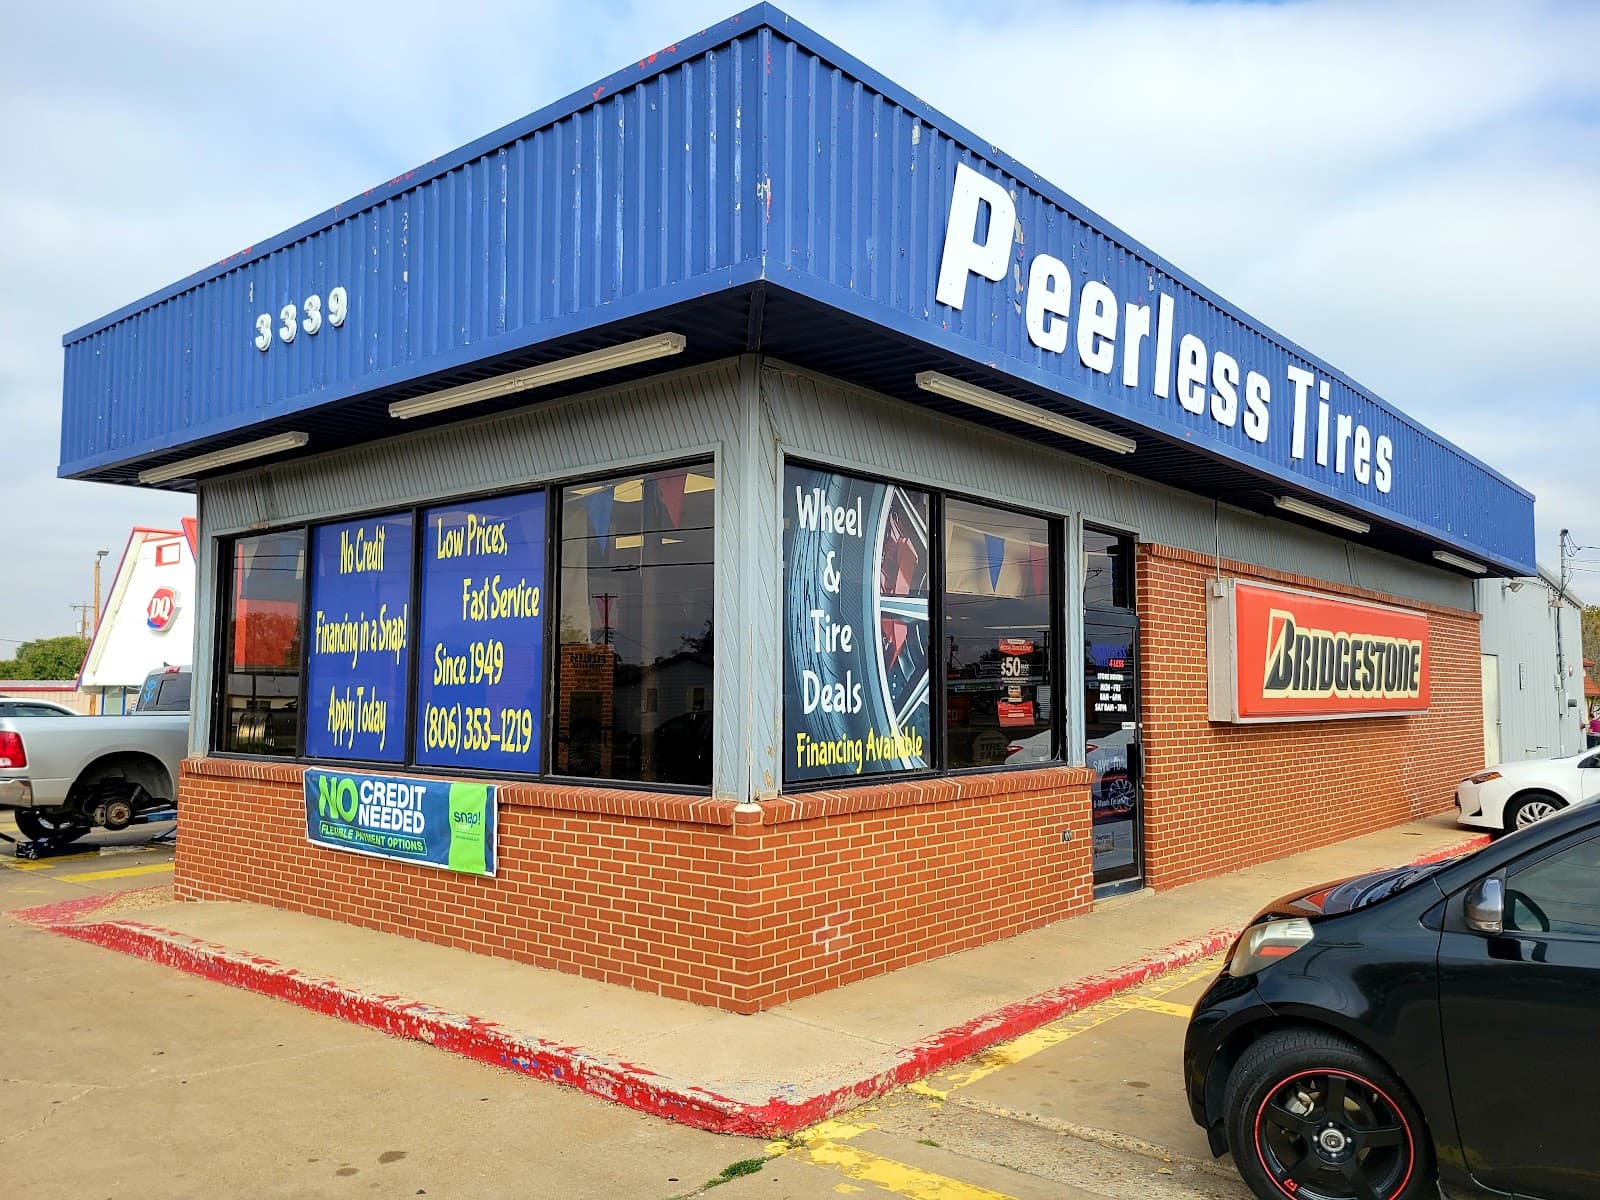 Peerless Tires - Amarillo (TX 79109), US, tire deals near me